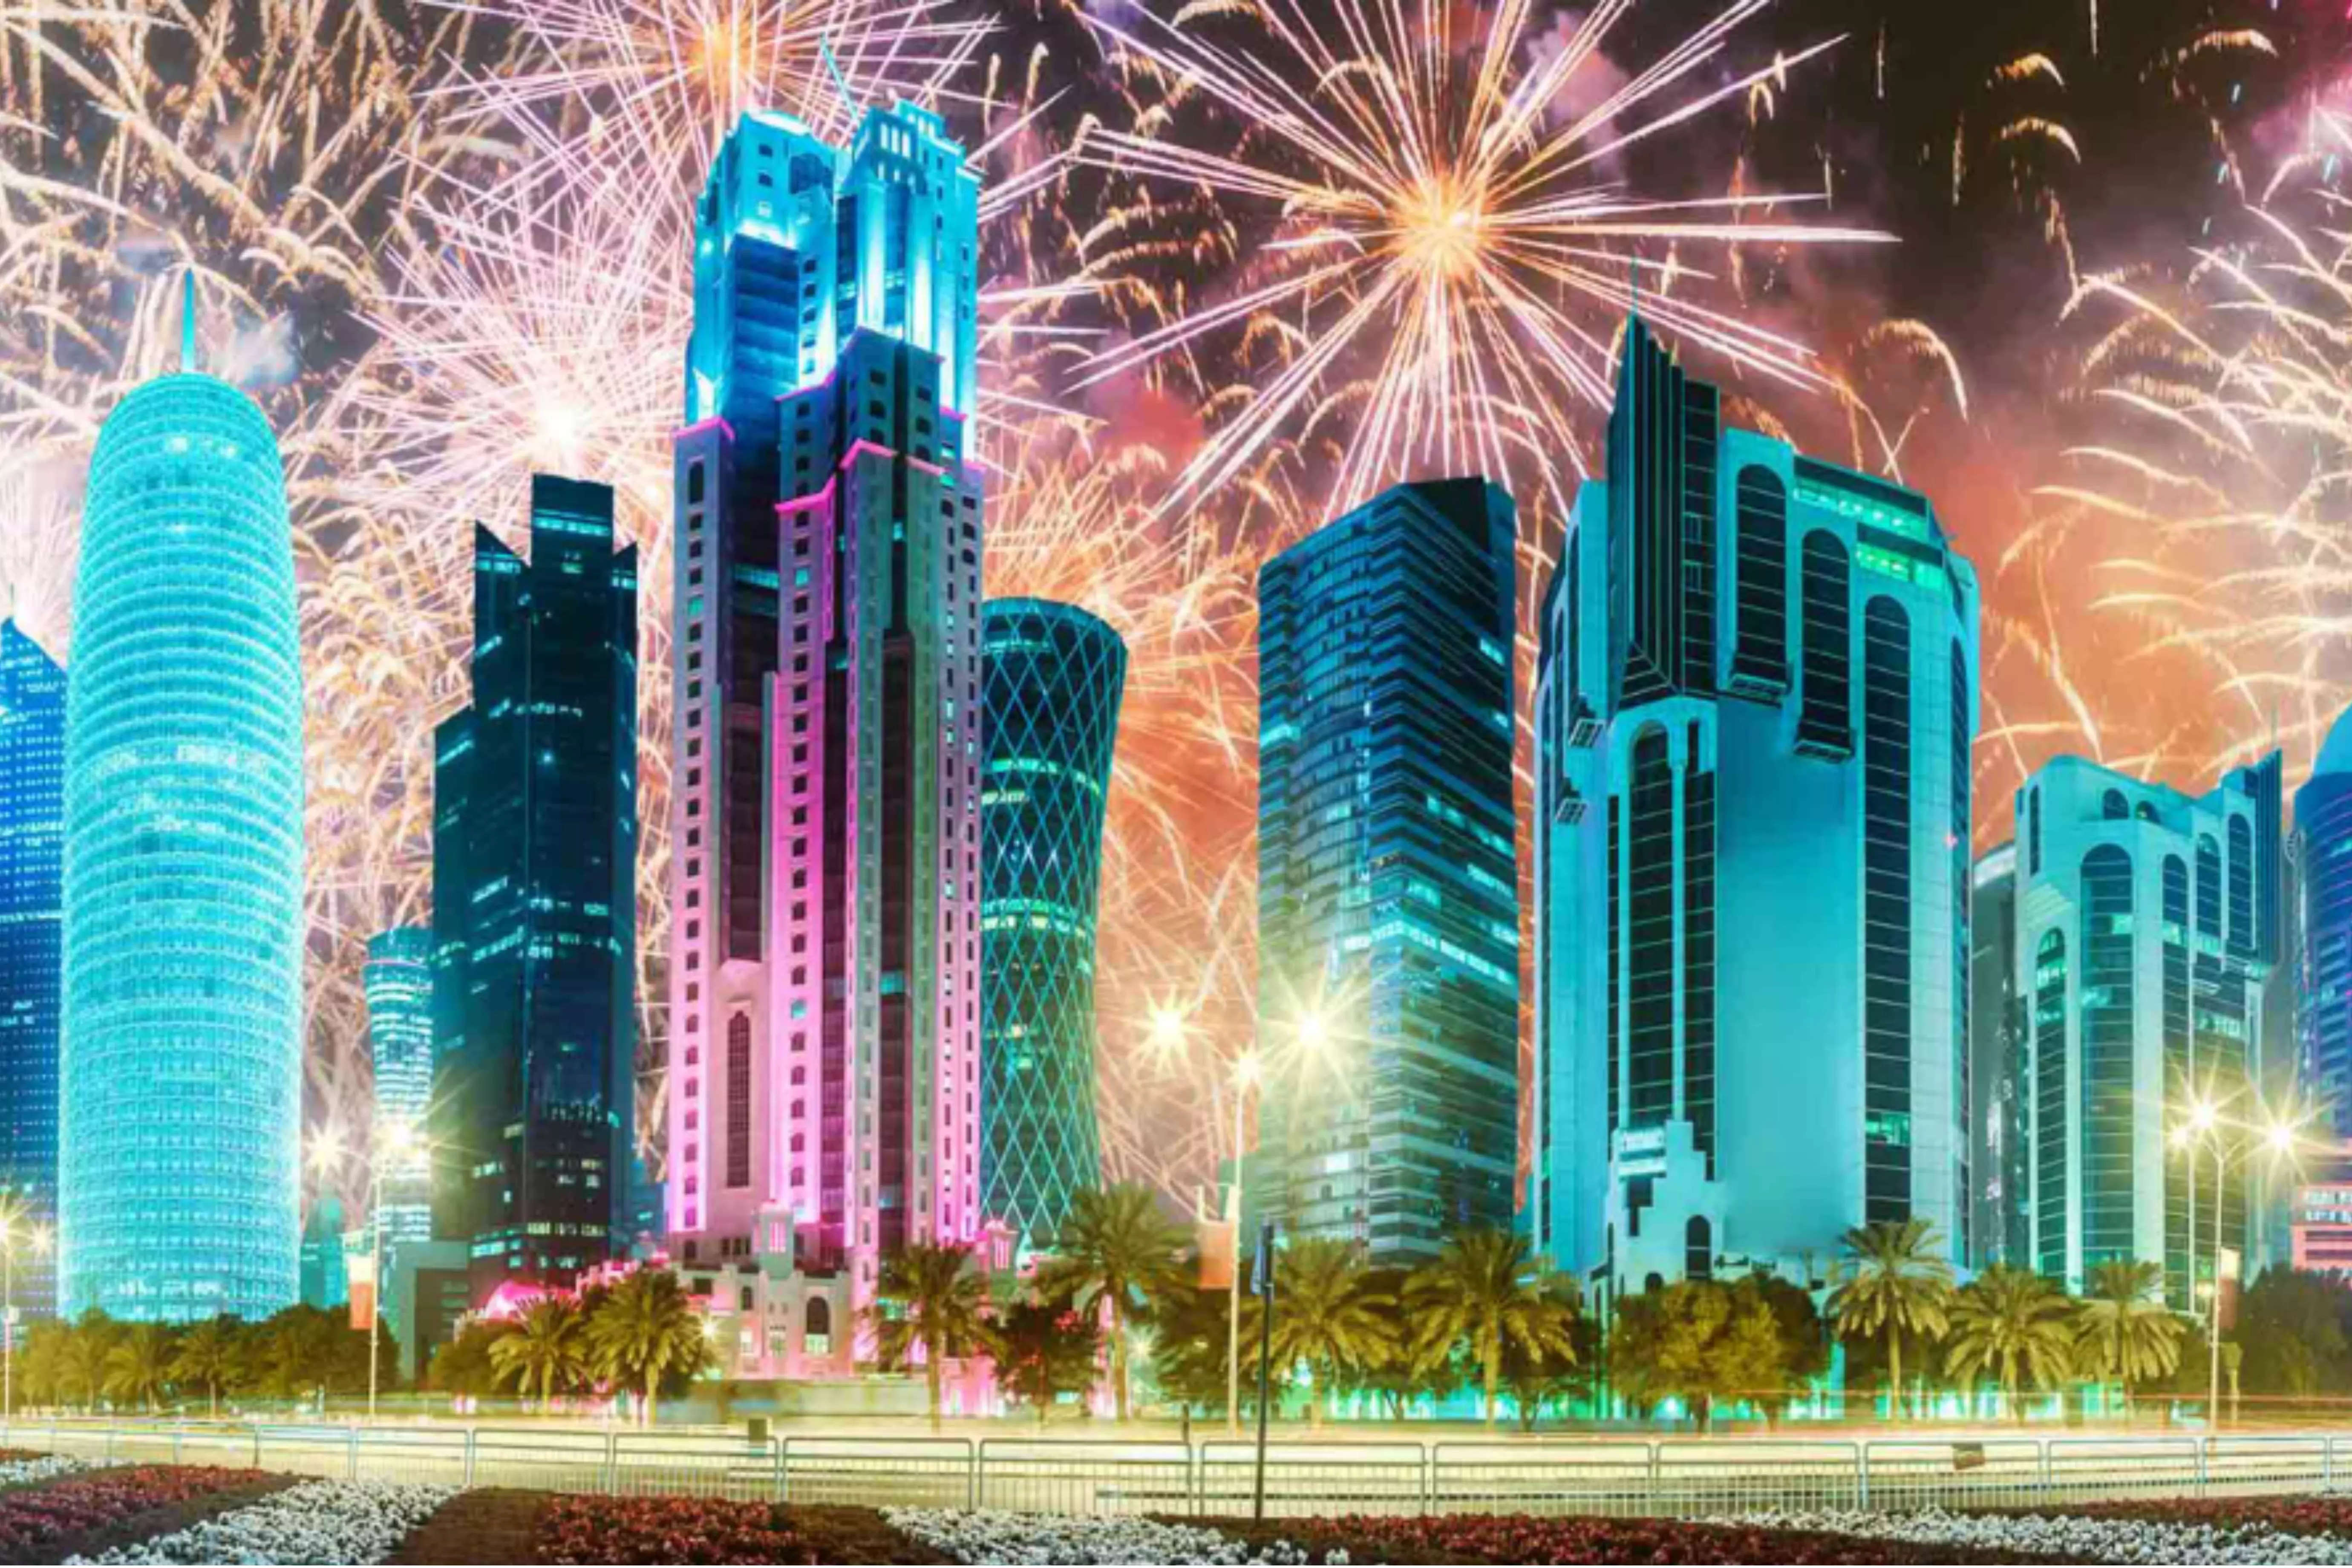 Qatar Tourism launches Qatar Specialist Program to upskill global travel trade partners